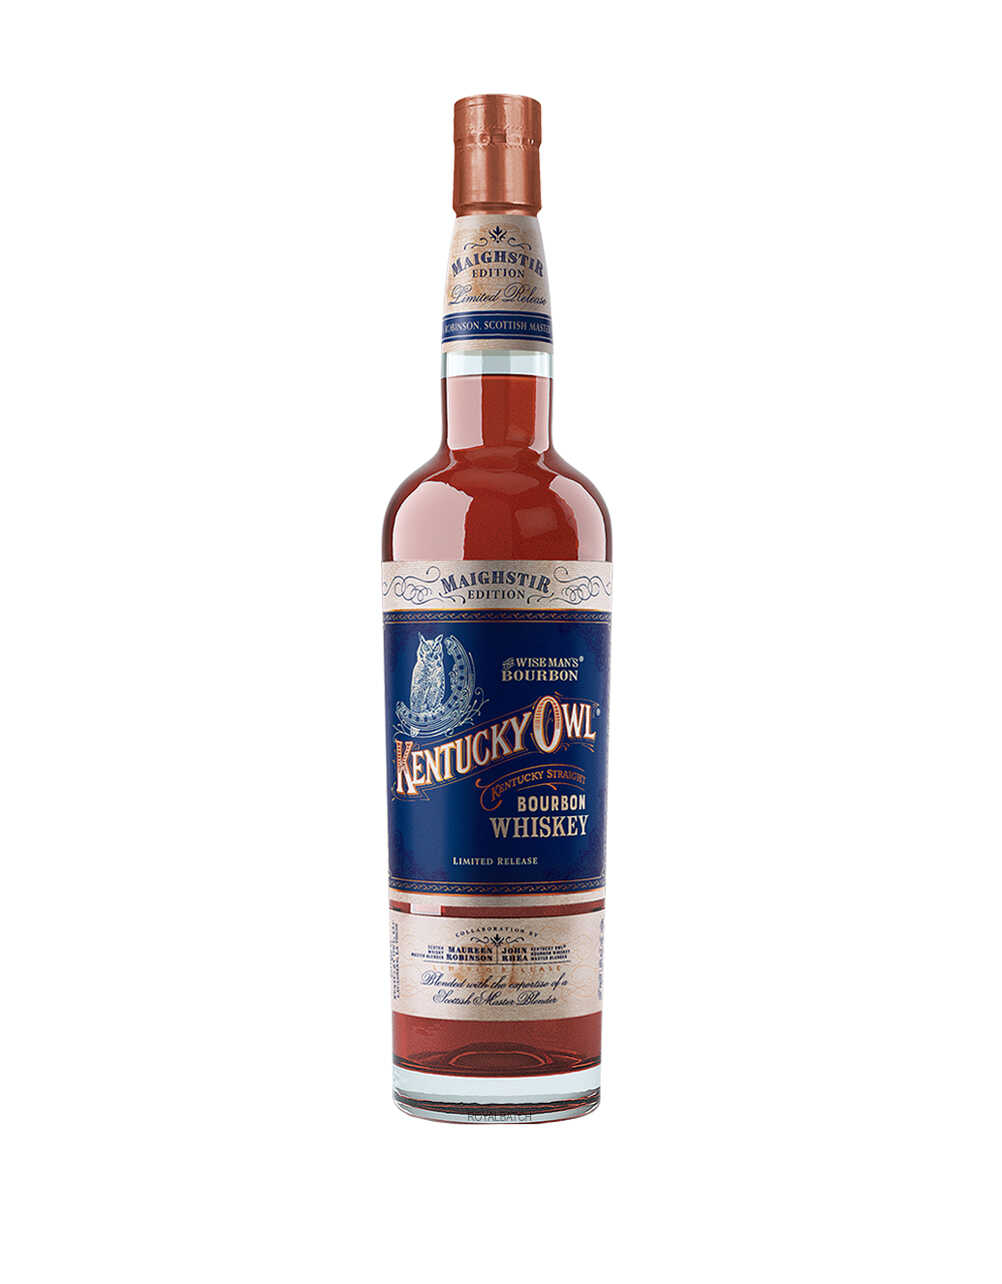 Kentucky Owl Maighstir Edition Limited Release Kentucky Straight Bourbon Whiskey